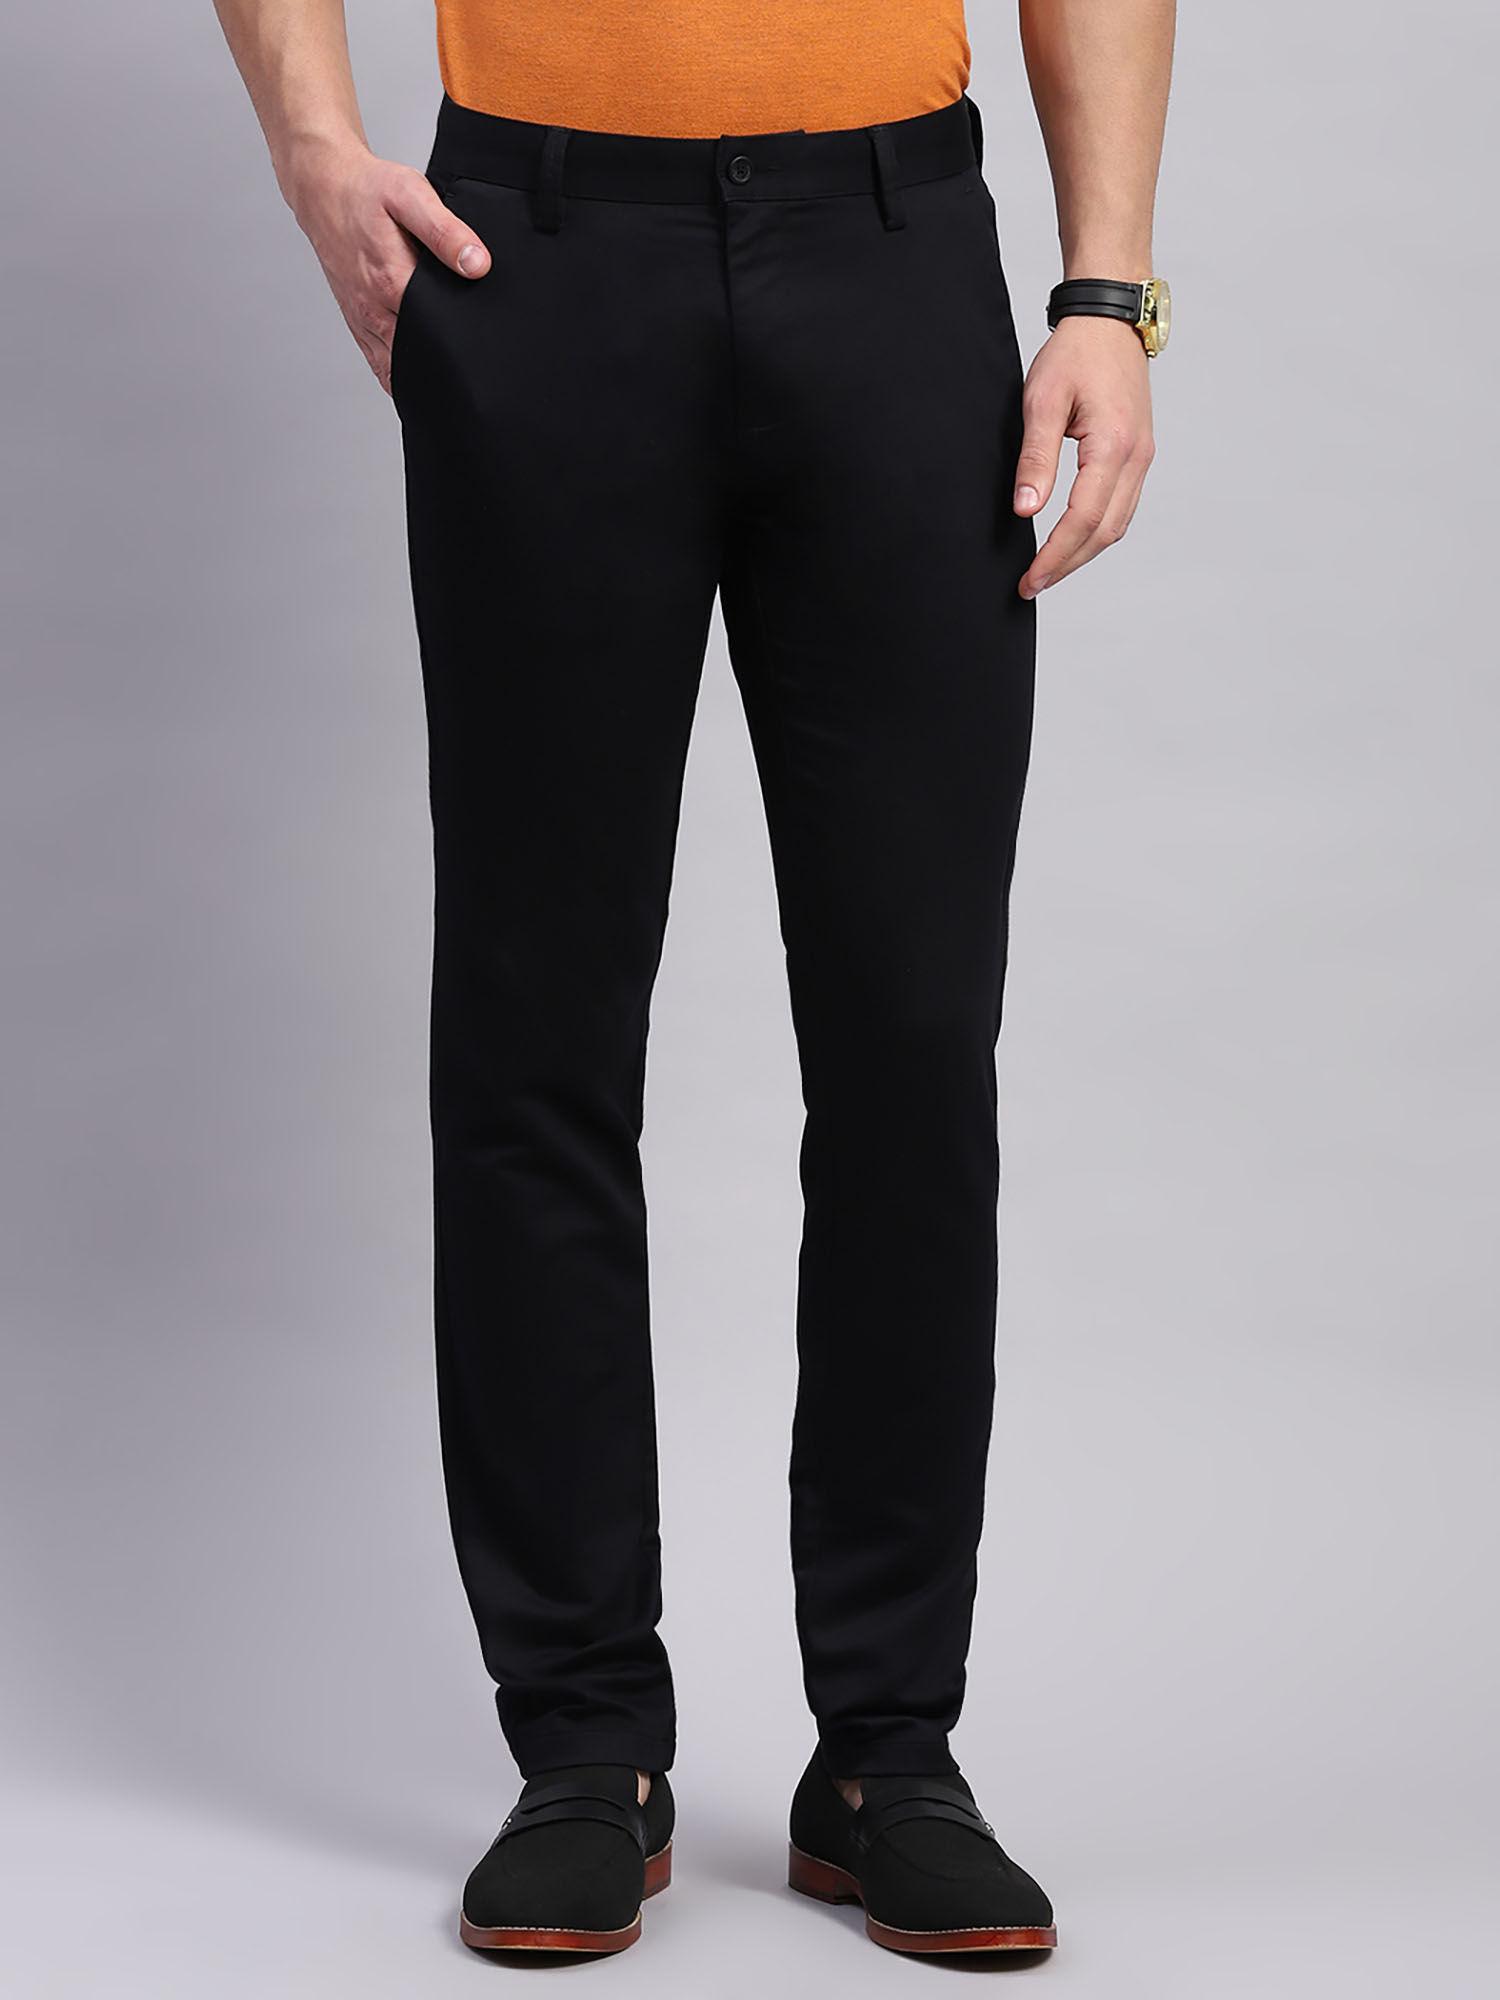 mens-black-solid-regular-fit-trouser